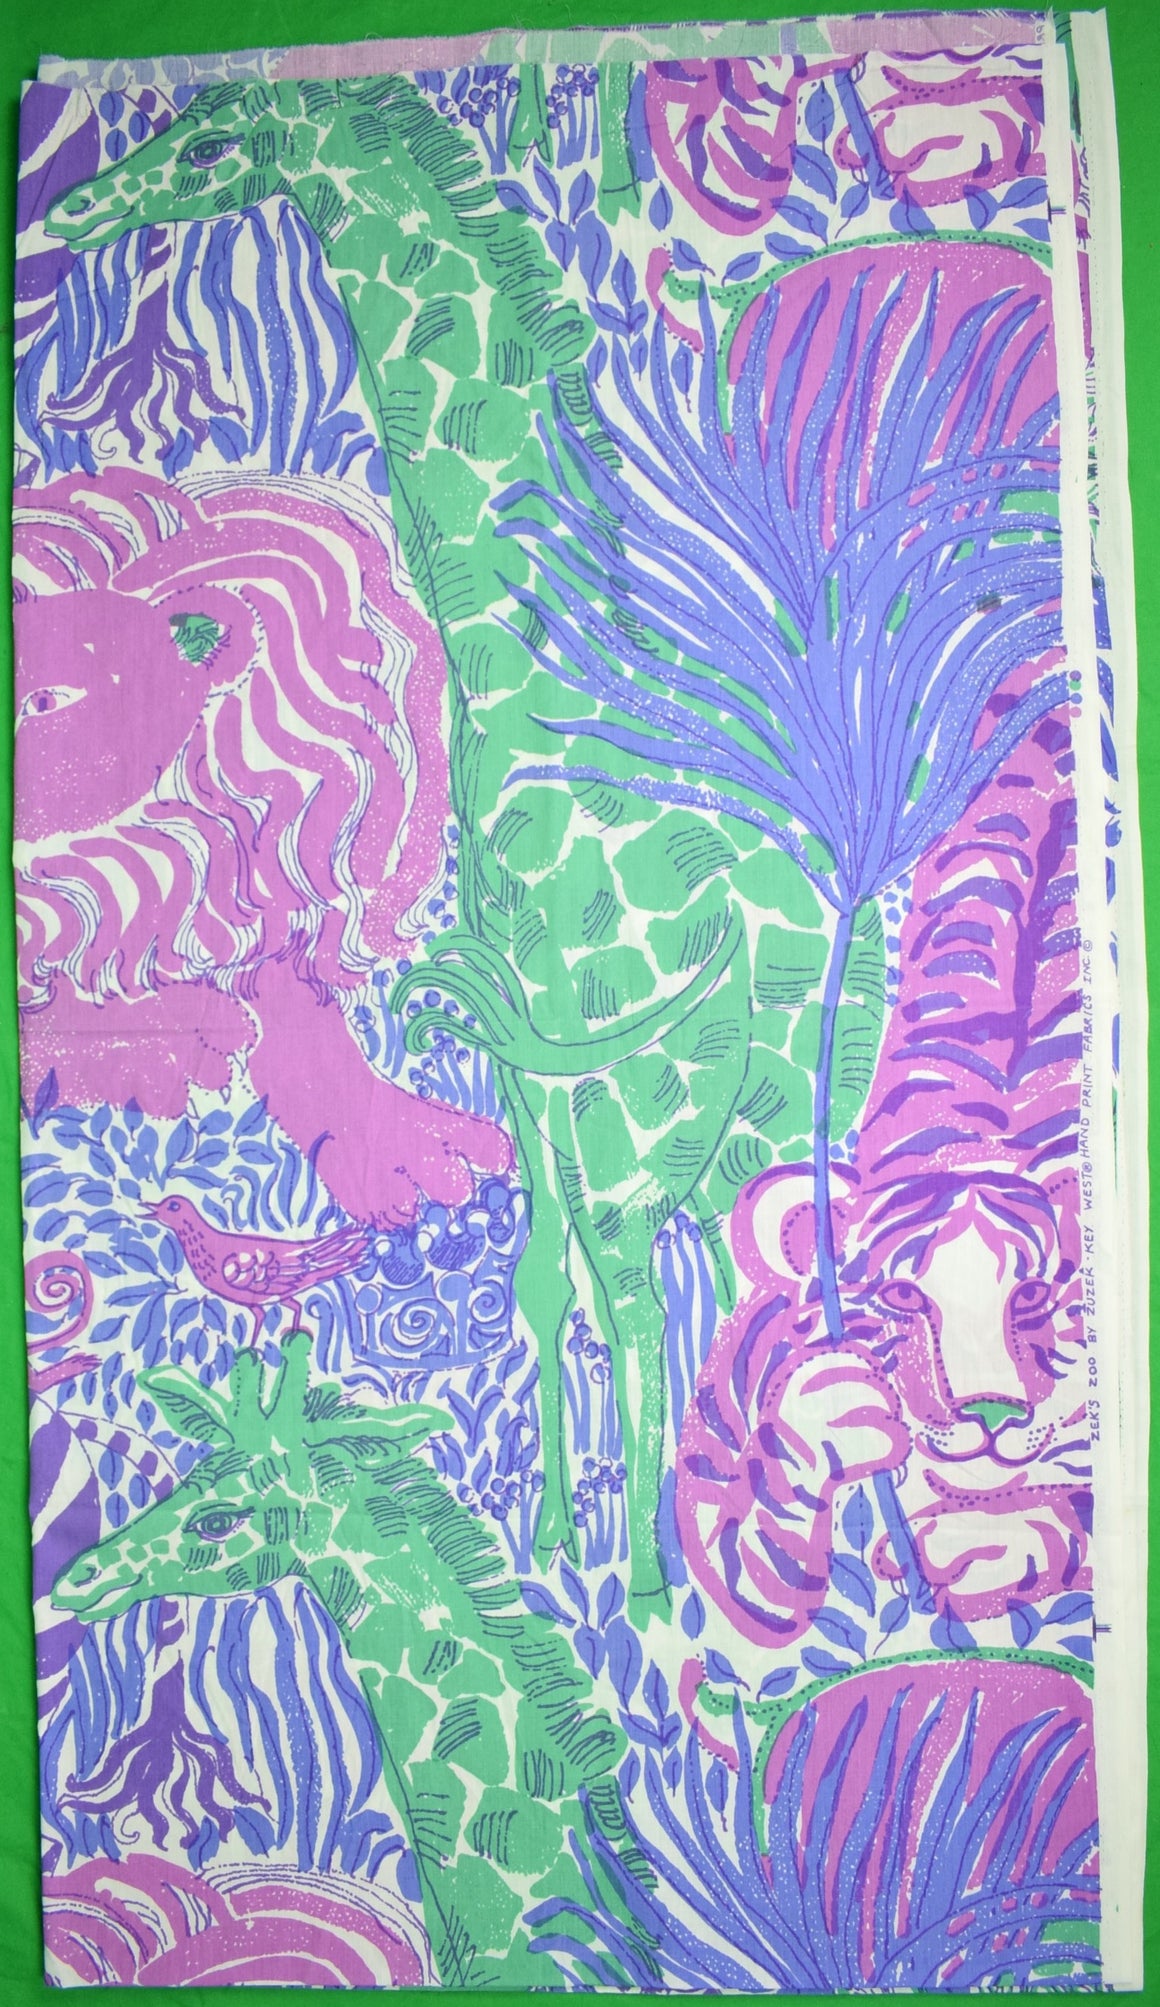 "Zek's Zoo By Zuzek Key West Hand-Print c1960s Lilly Pulitzer Fabric" (SOLD)